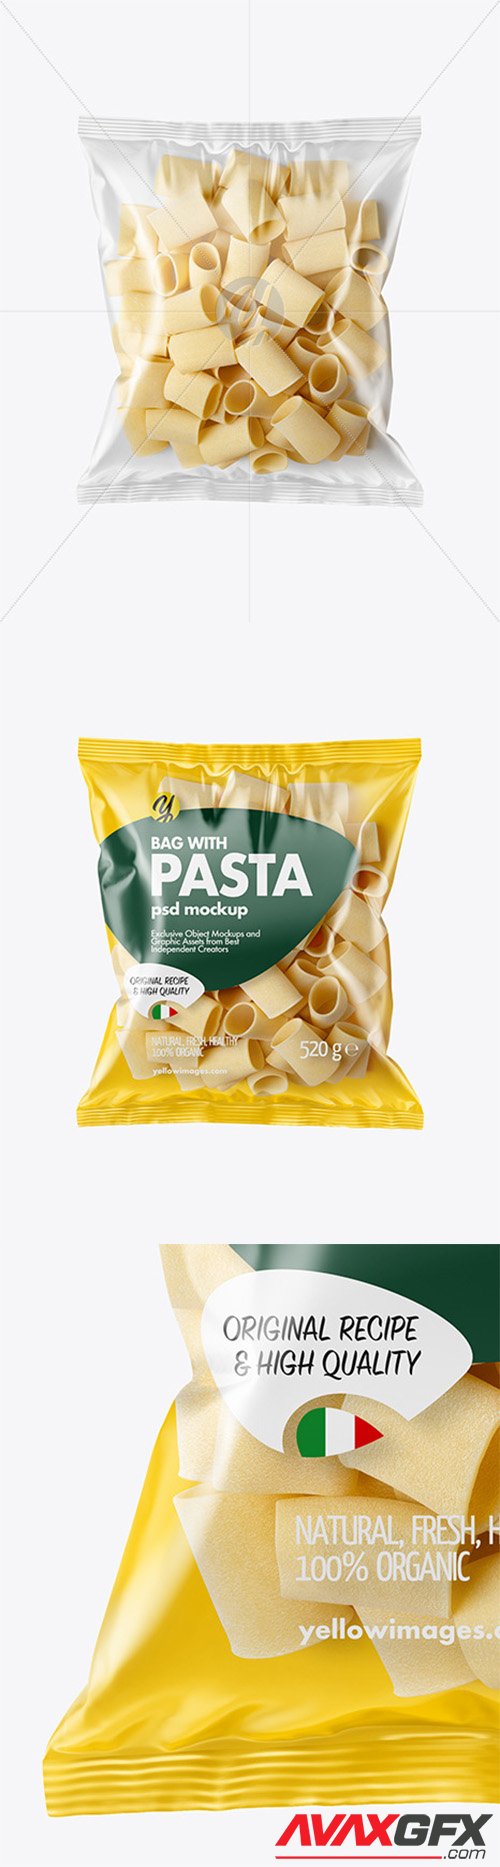 Plastic Bag With Paccheri Pasta Mockup 80259